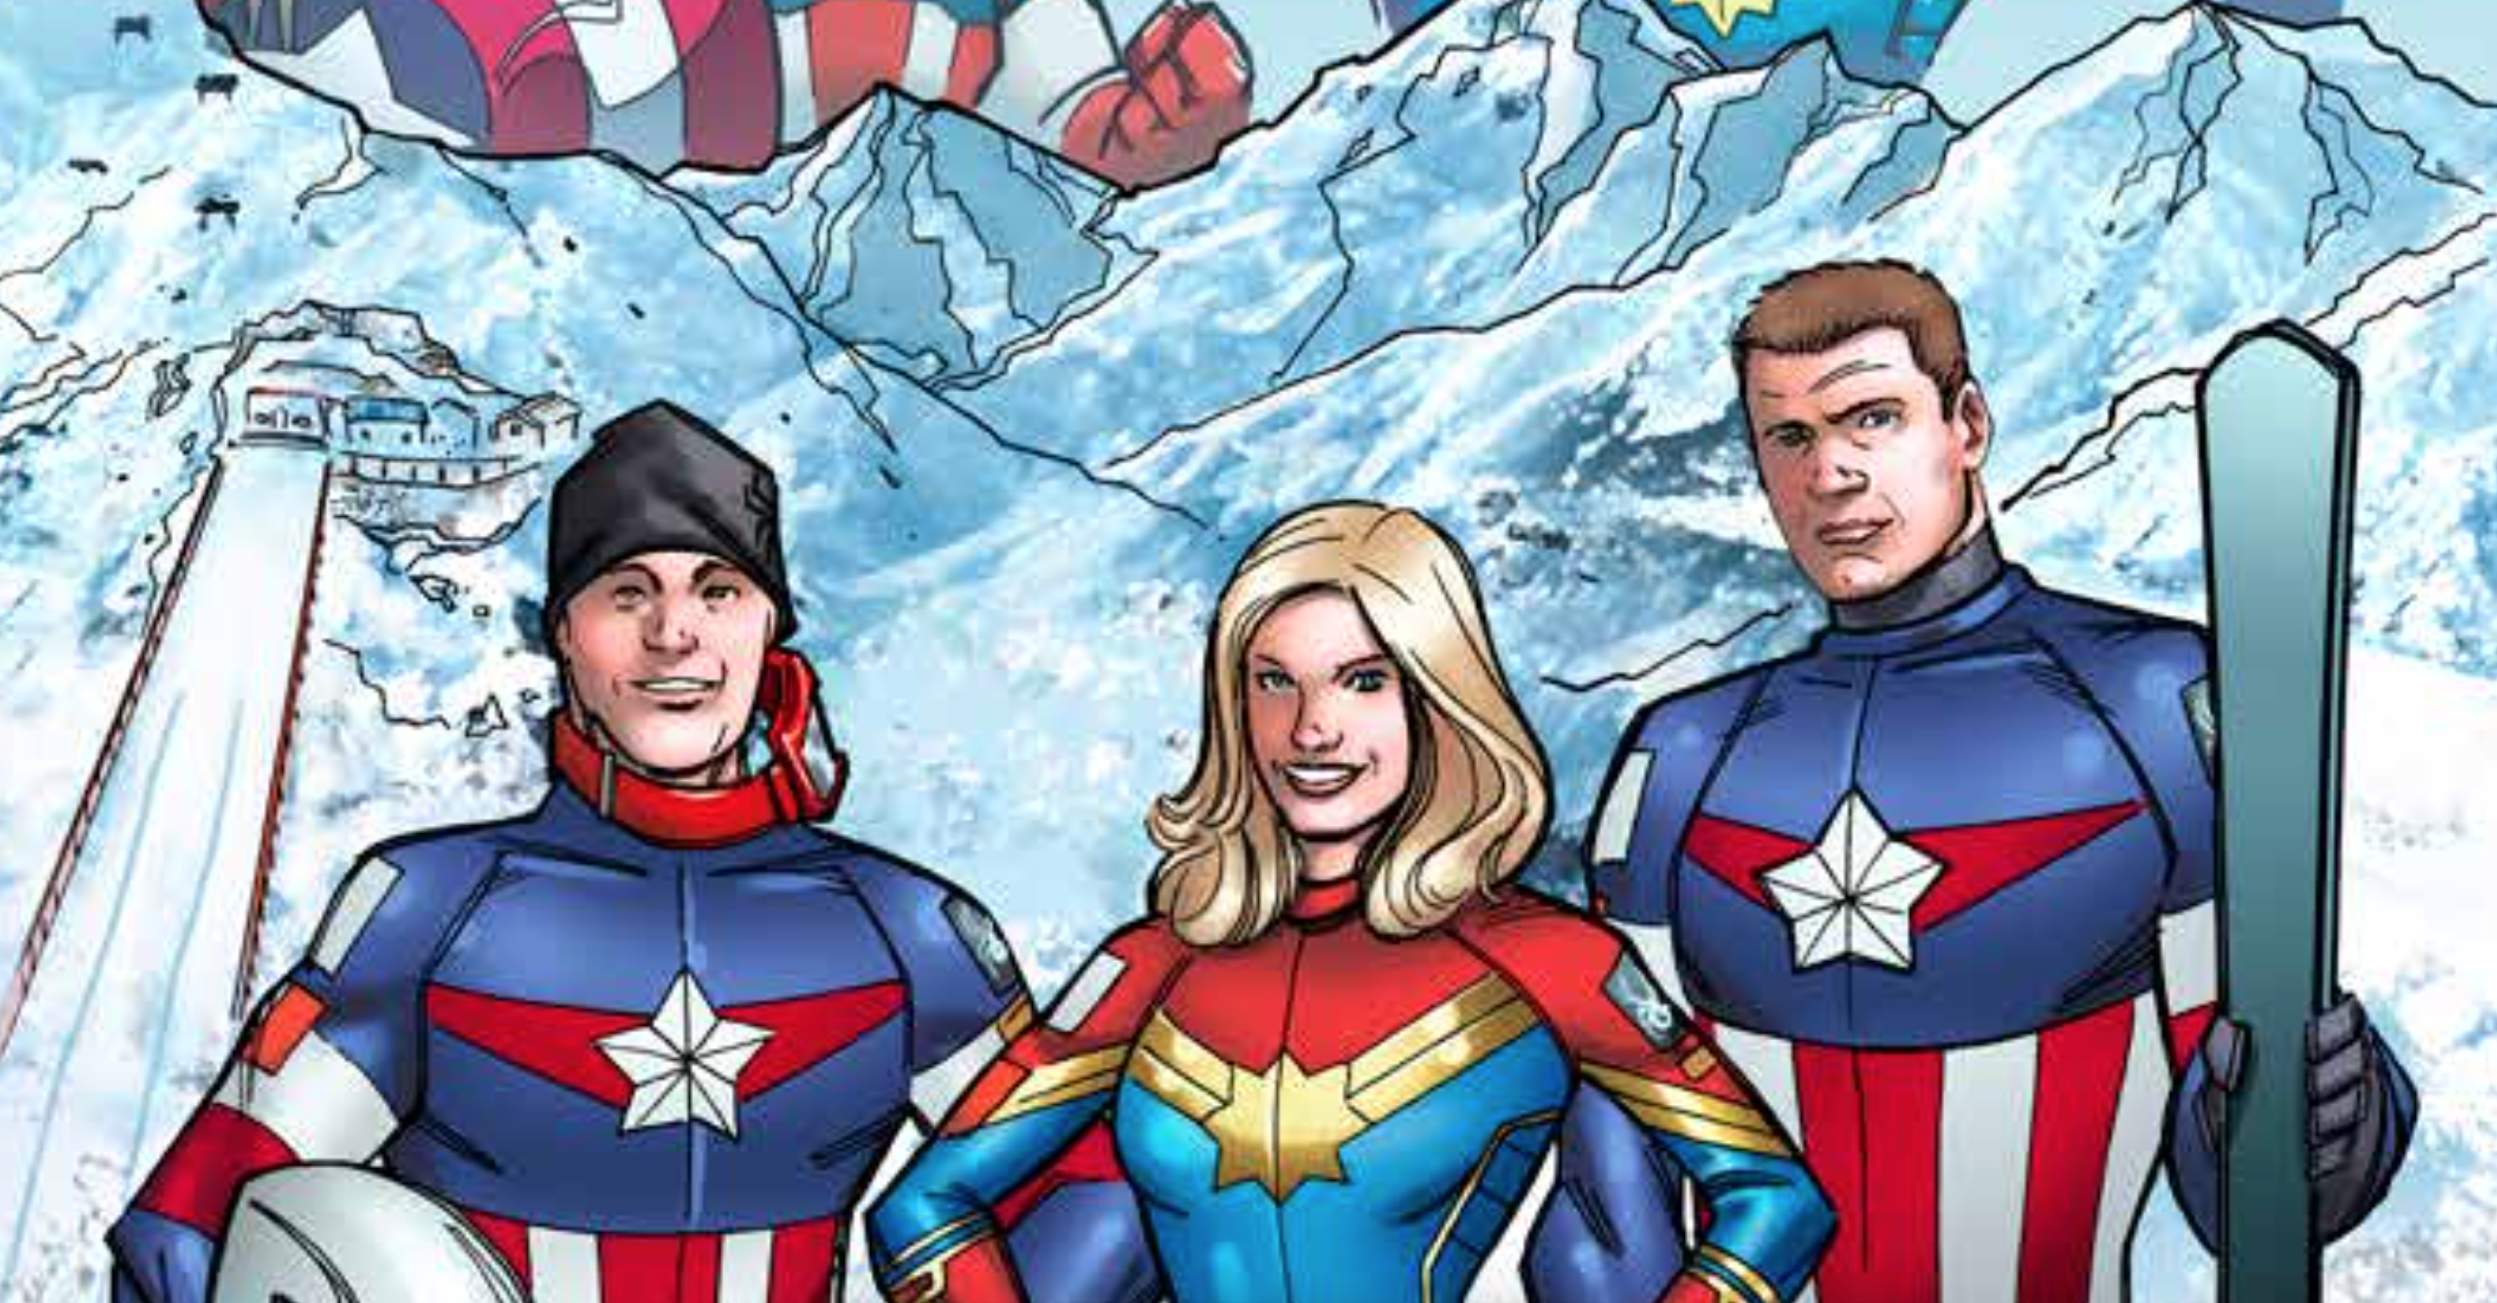 Spyder And Disney Bring Marvel Super Hero Inspired Style To U.S. Ski Team